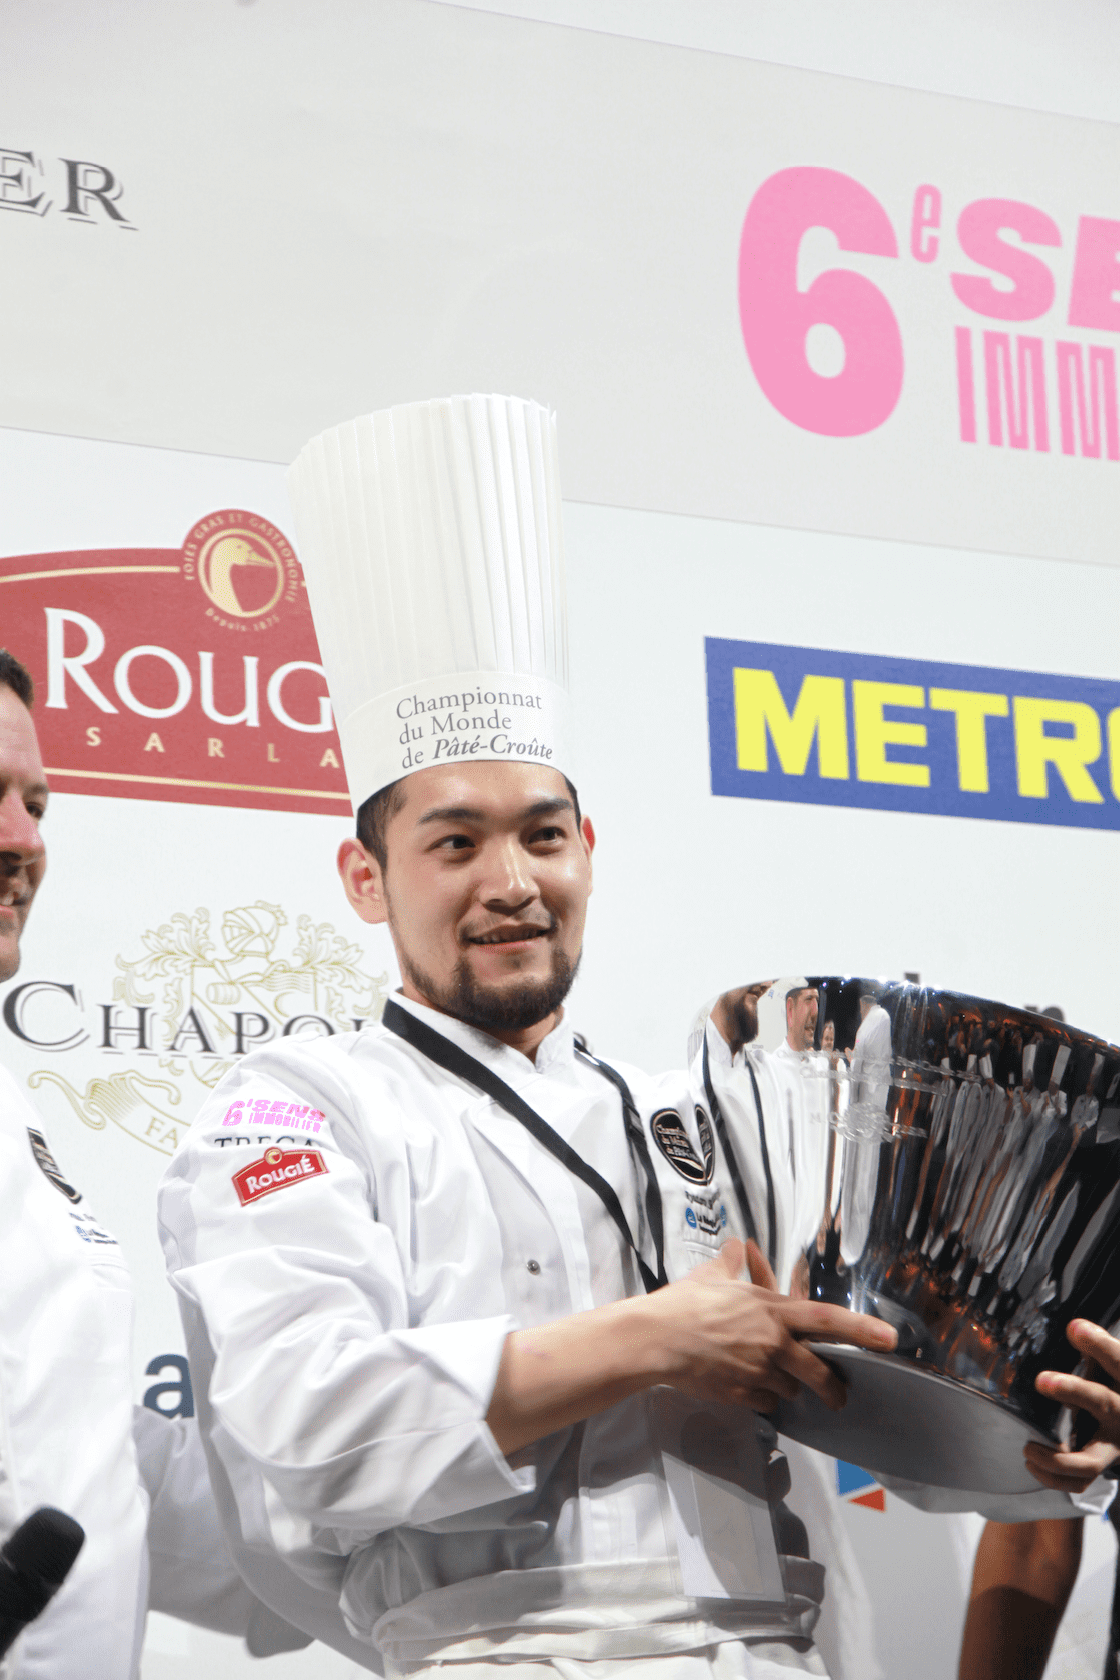 Ryutaro Shiomi, nouveau Champion du Monde de Pâté-Croûte